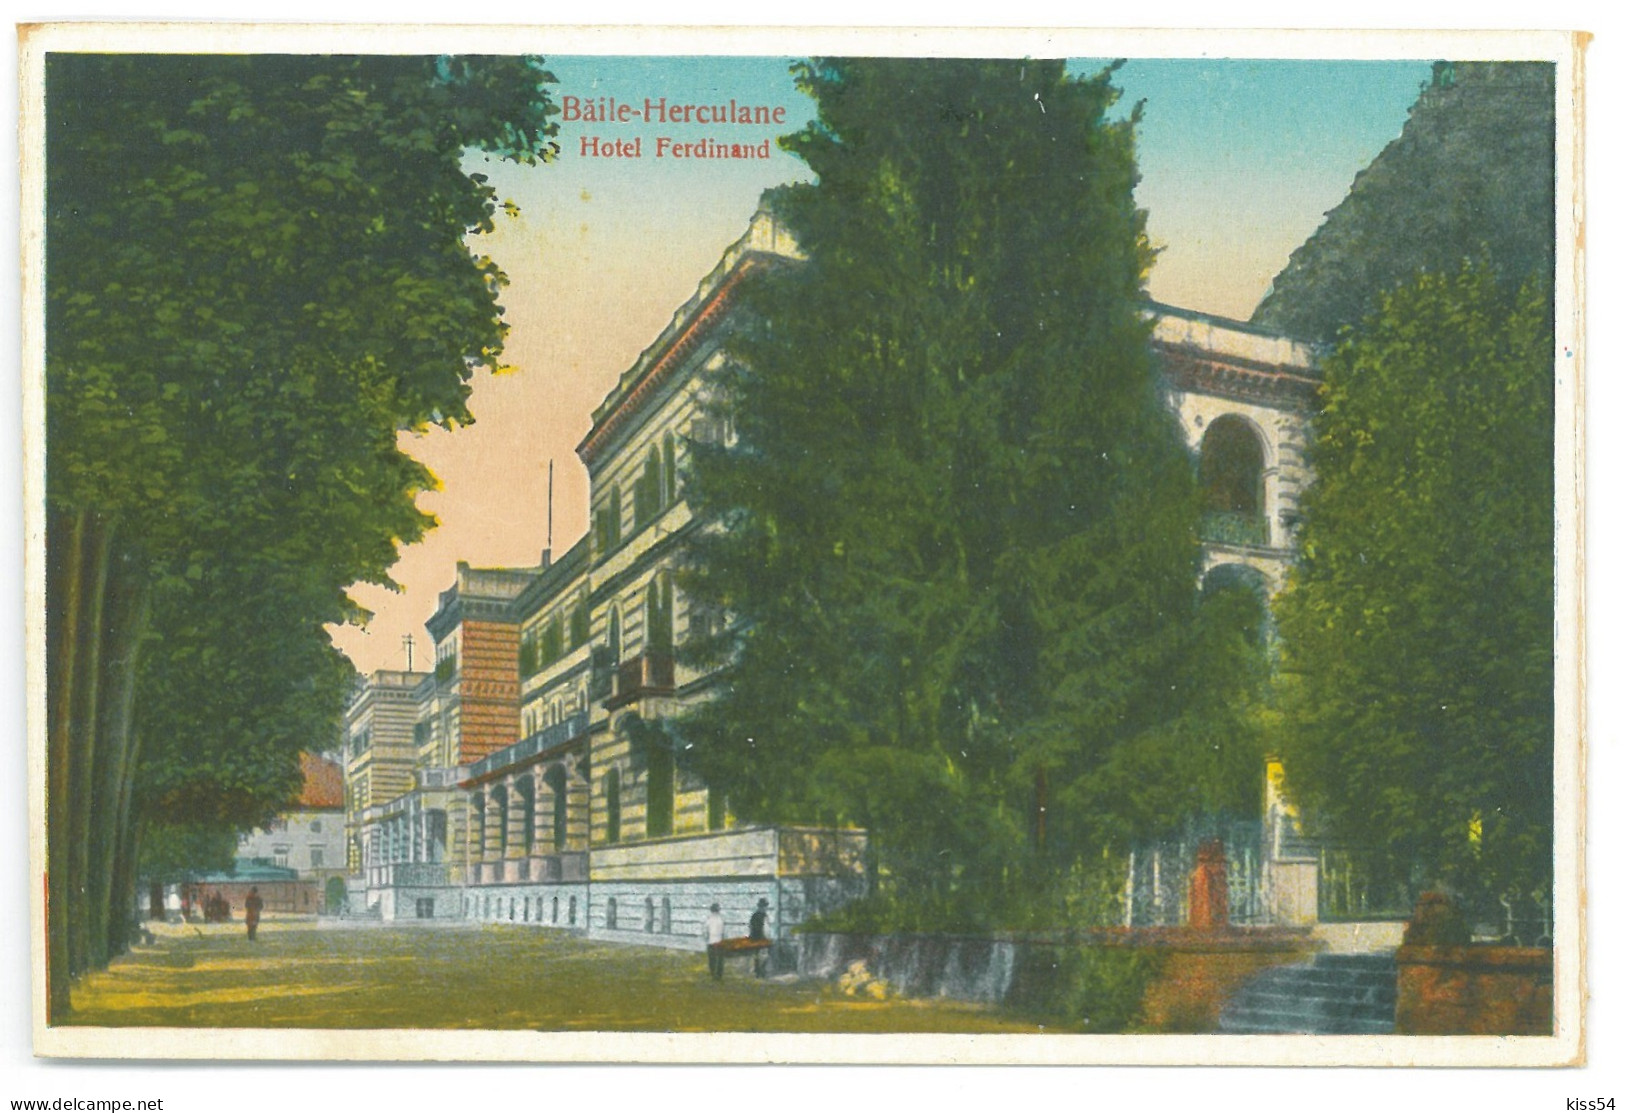 RO 38 - 25080 Baile HERCULANE, Caras-Severin, Ferdinand Hotel, Romania - Old Postcard - Unused - Romania